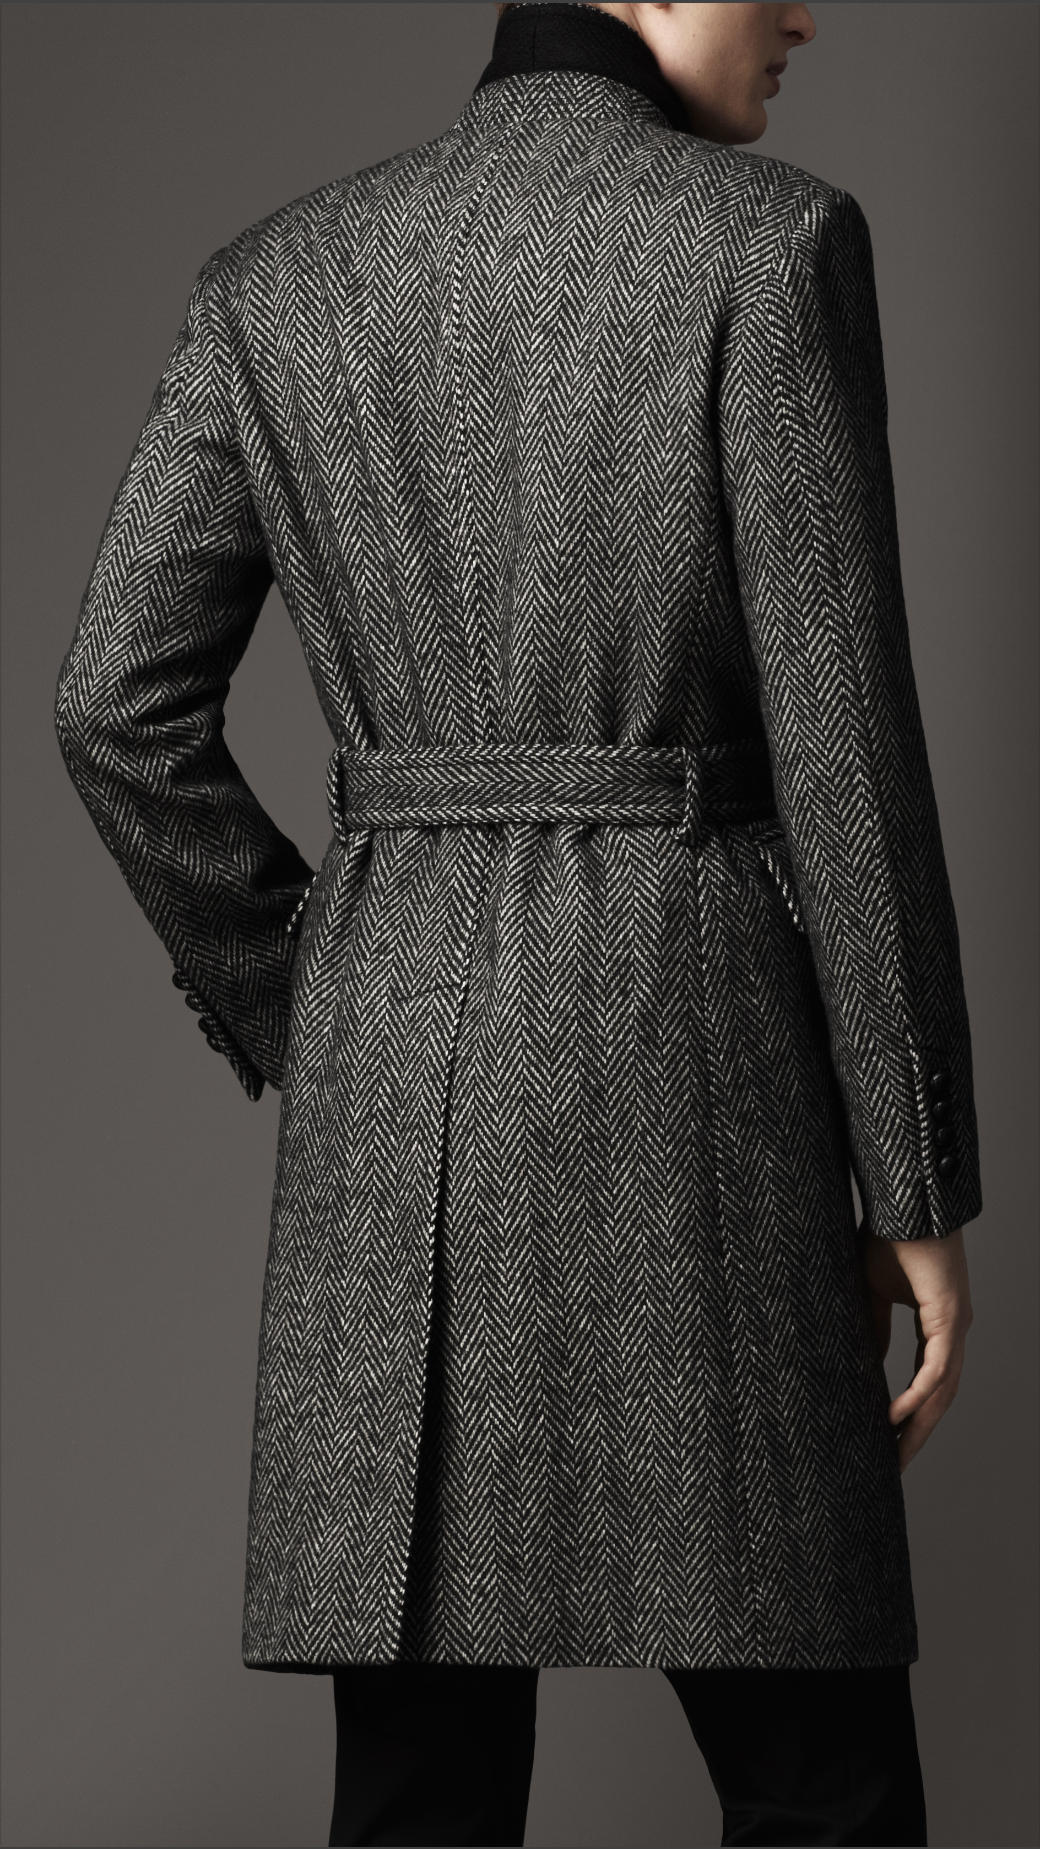 Burberry Herringbone Lambswool Coat in Charcoal (Gray) for Men - Lyst